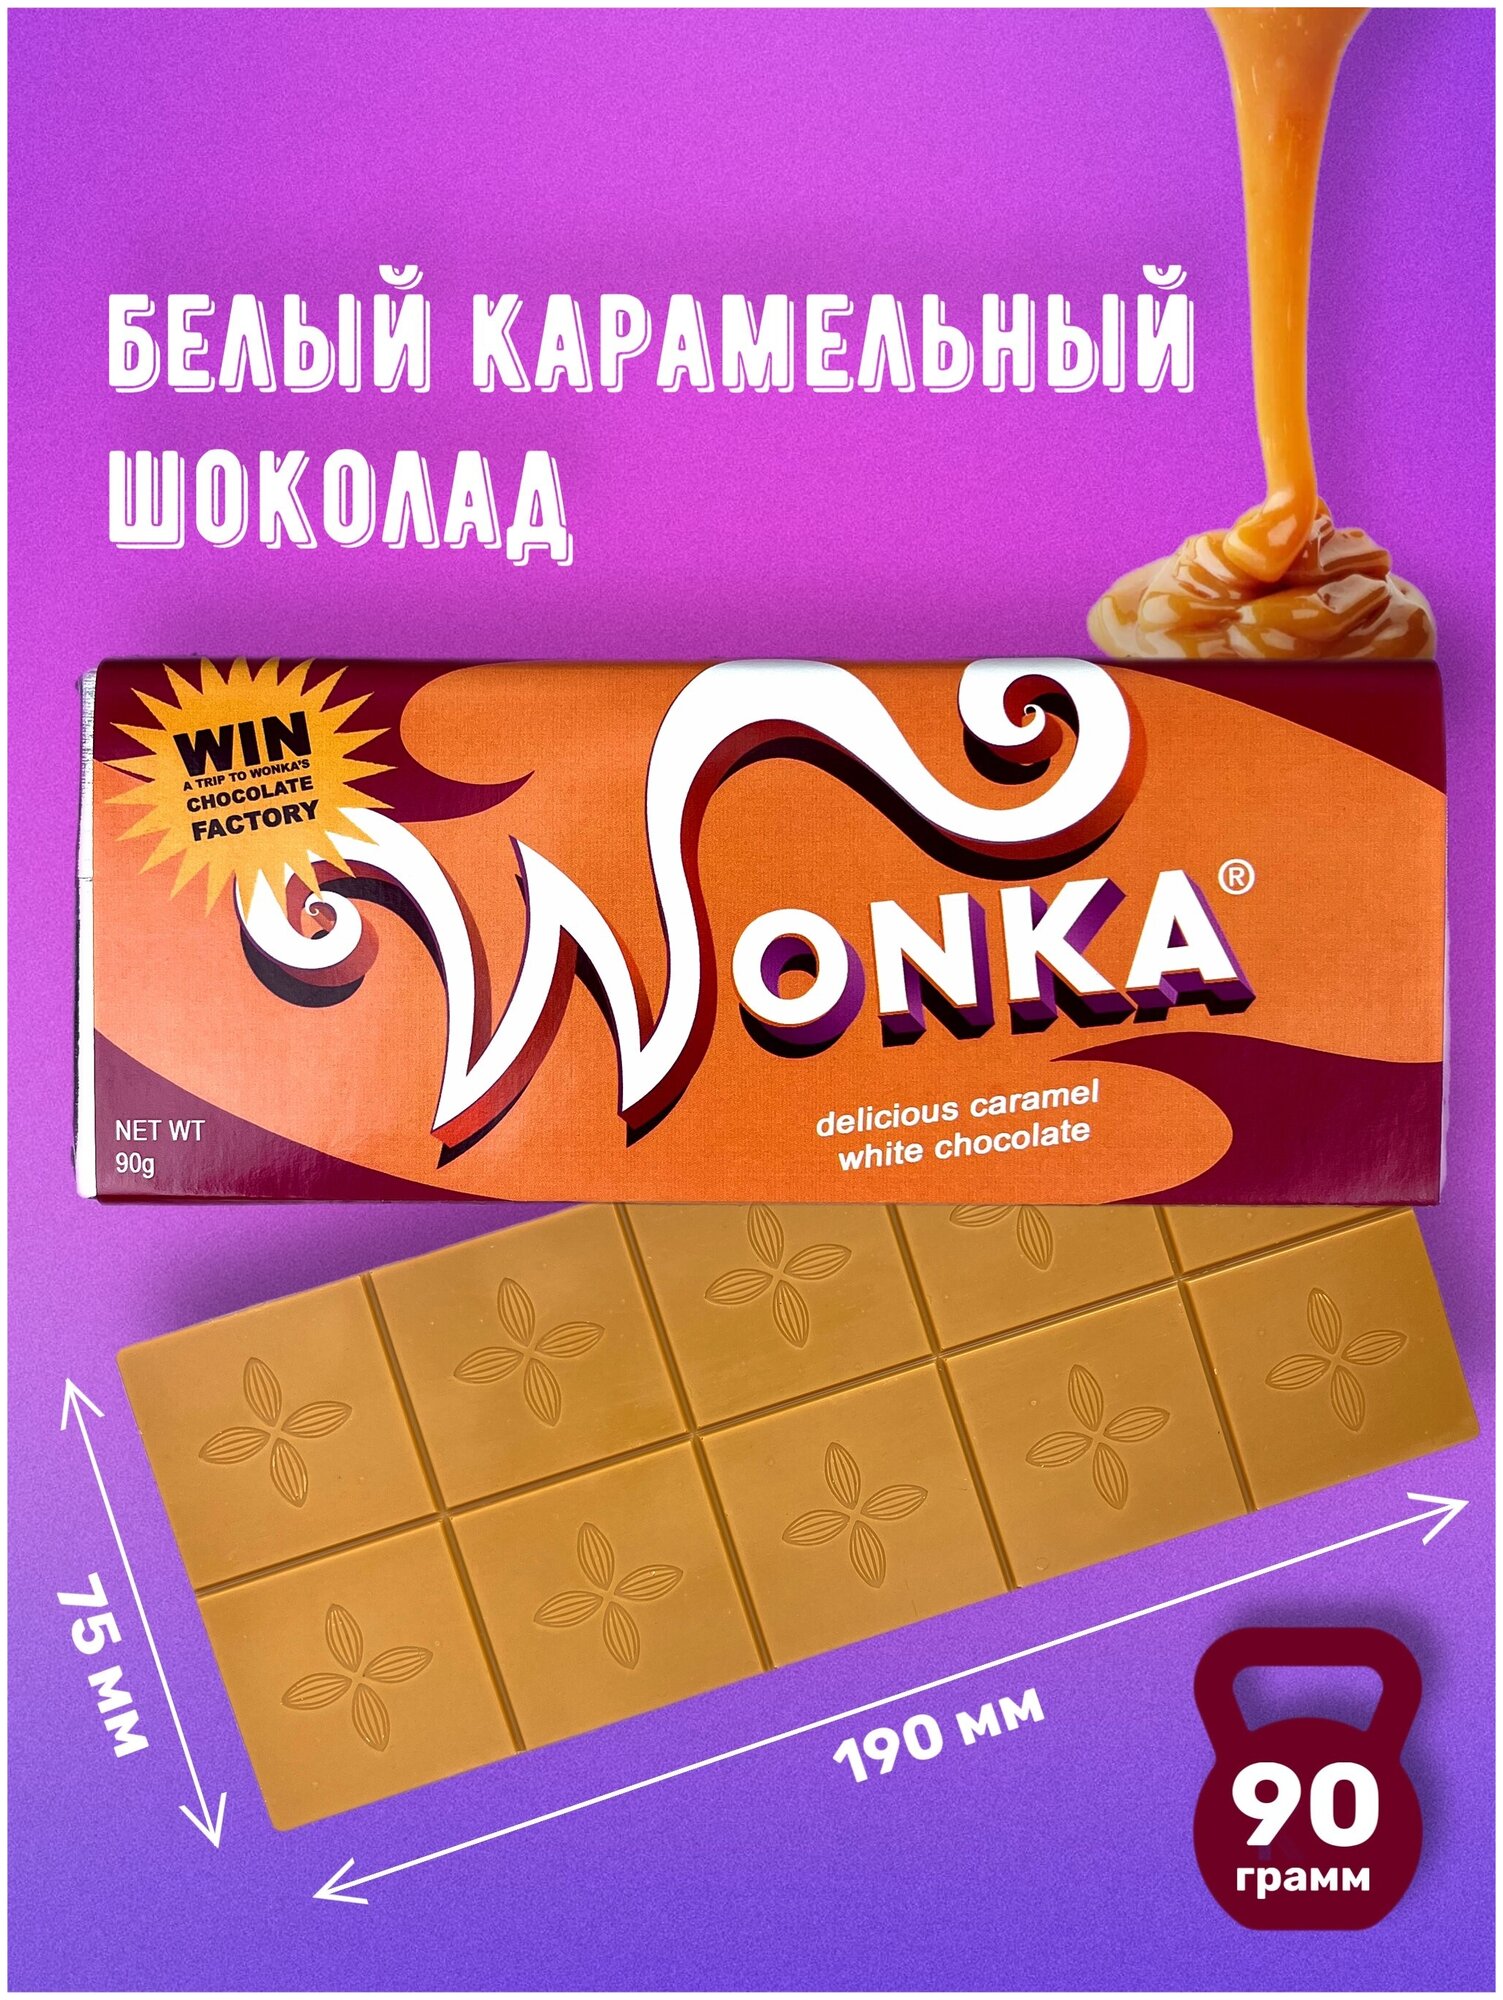 Шоколад Wonka. Шоколад Вилли Вонка с золотым билетом 4 плитки по 90 грамм набор - фотография № 4